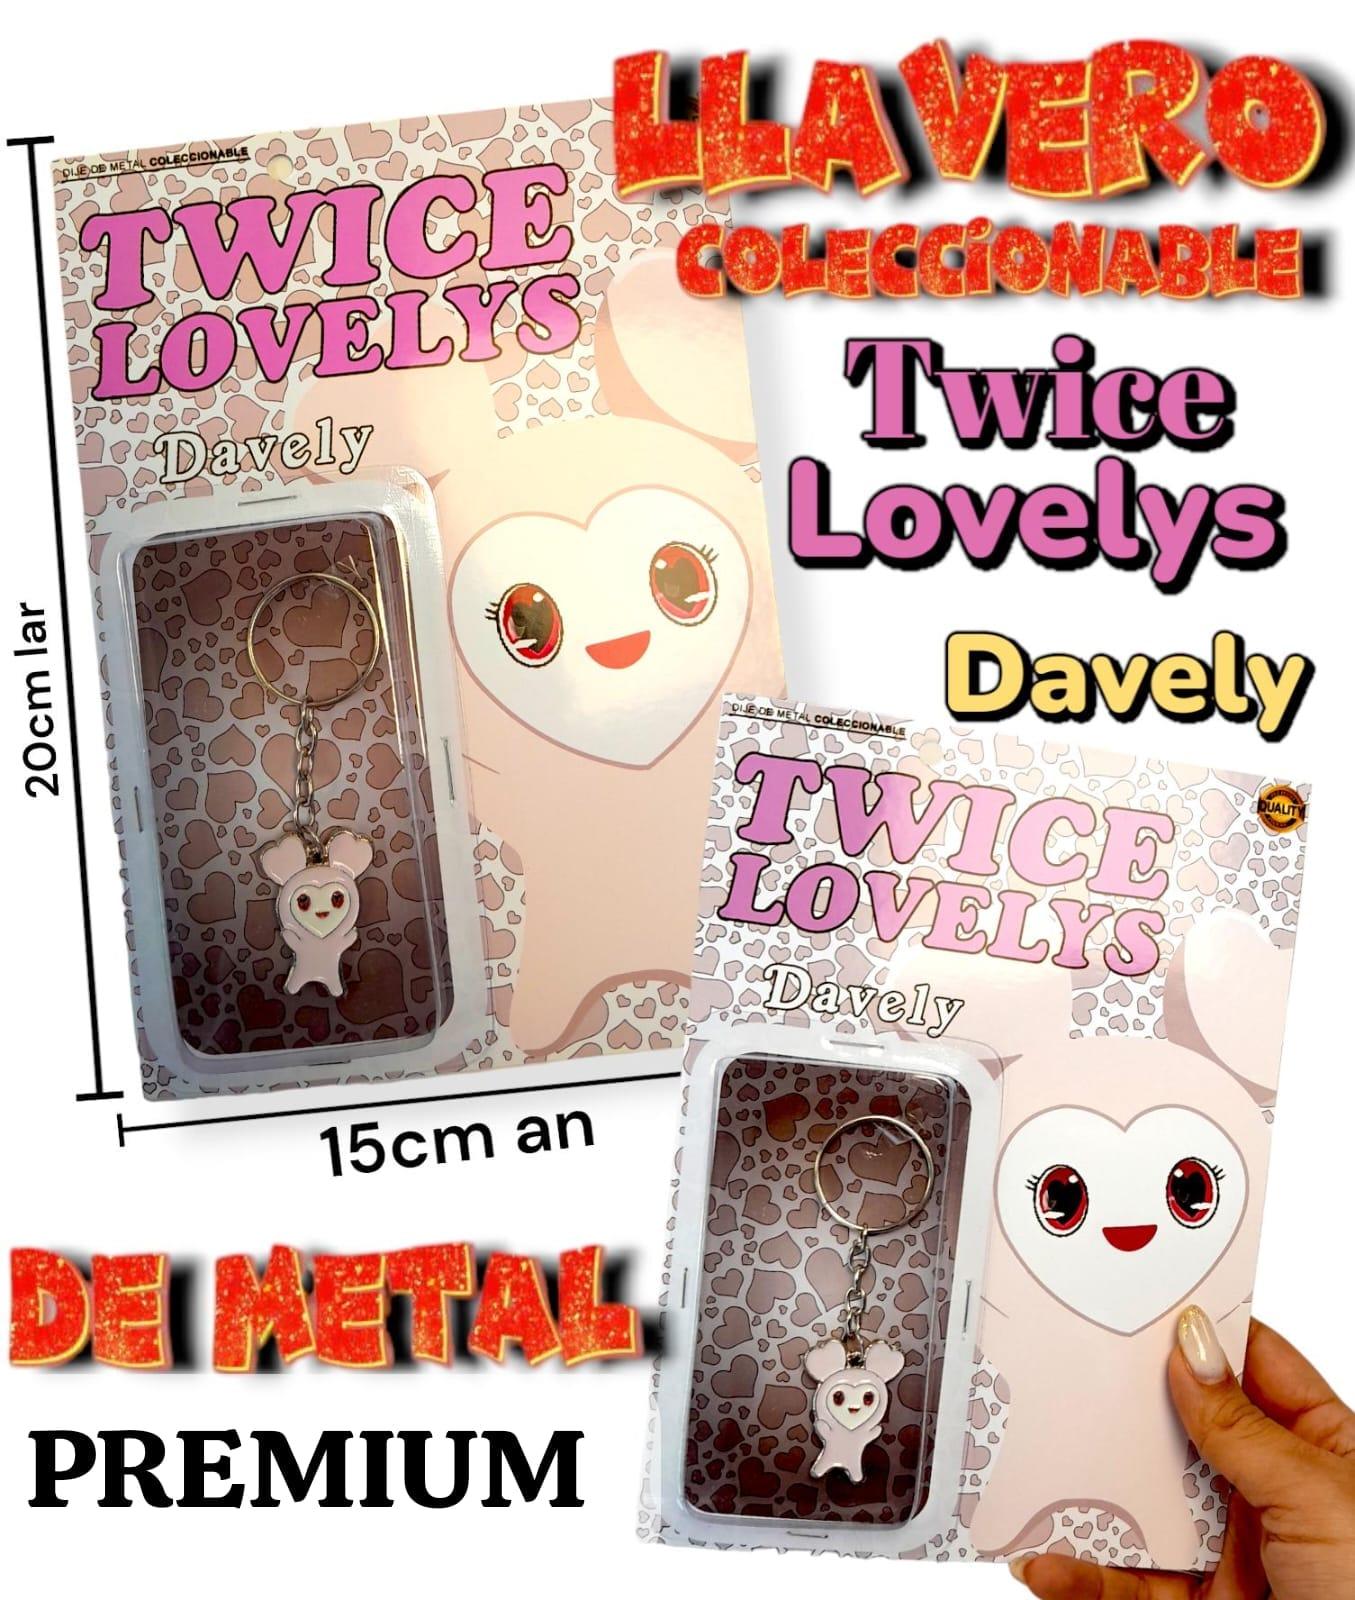 Llavero Premium Coleccionable de Metal  Twice Lovelys (DAVELY)